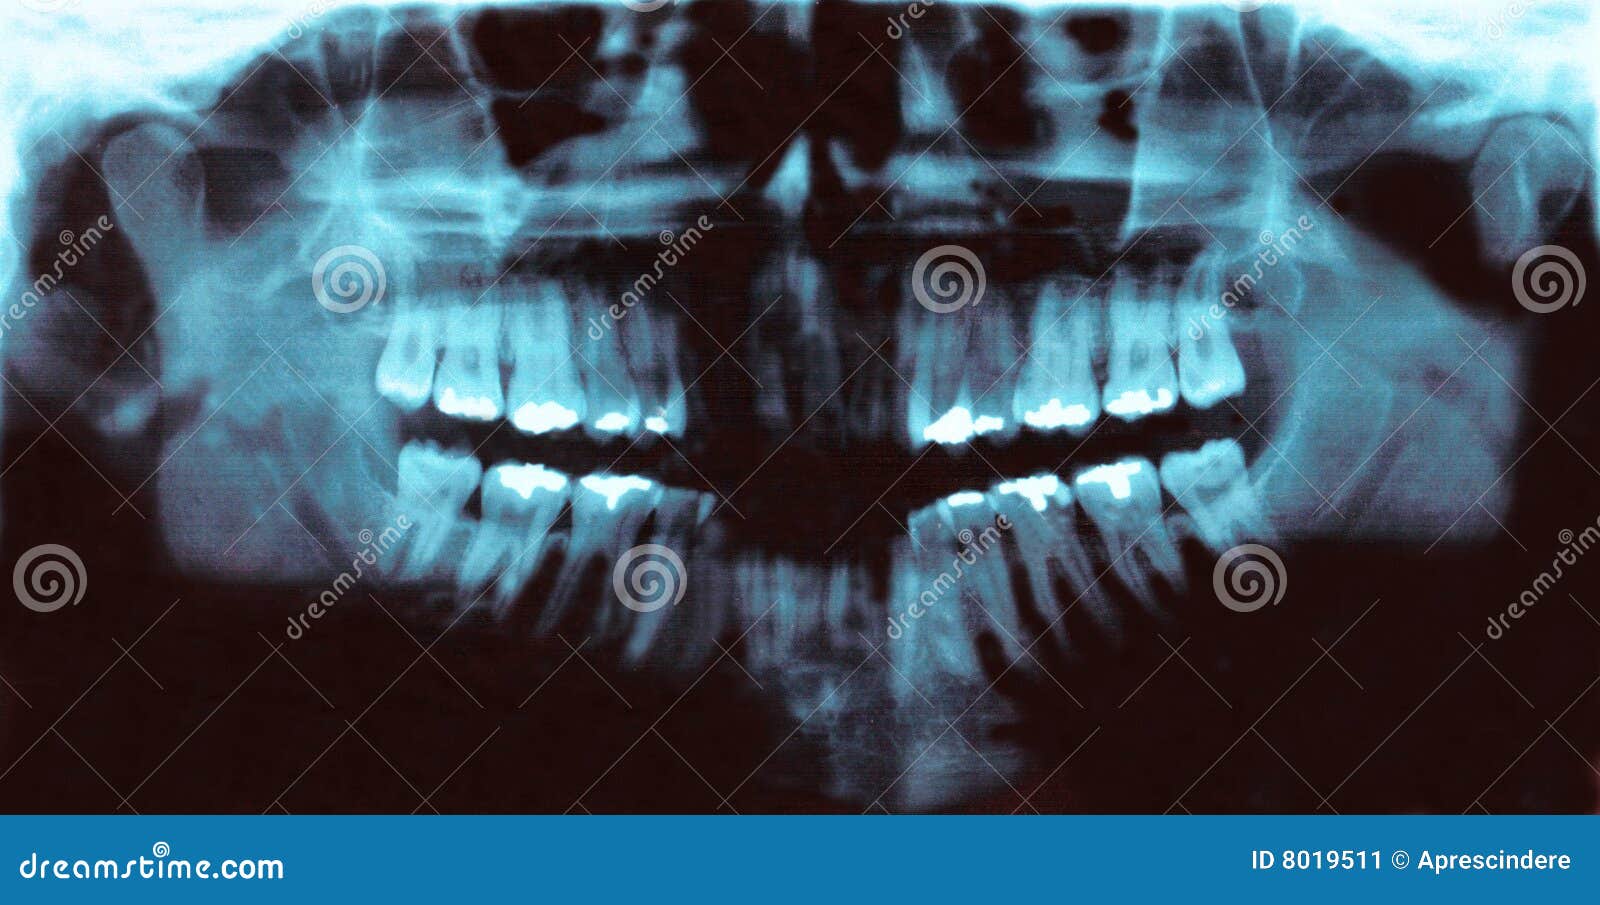 panoramic dental radiology slide